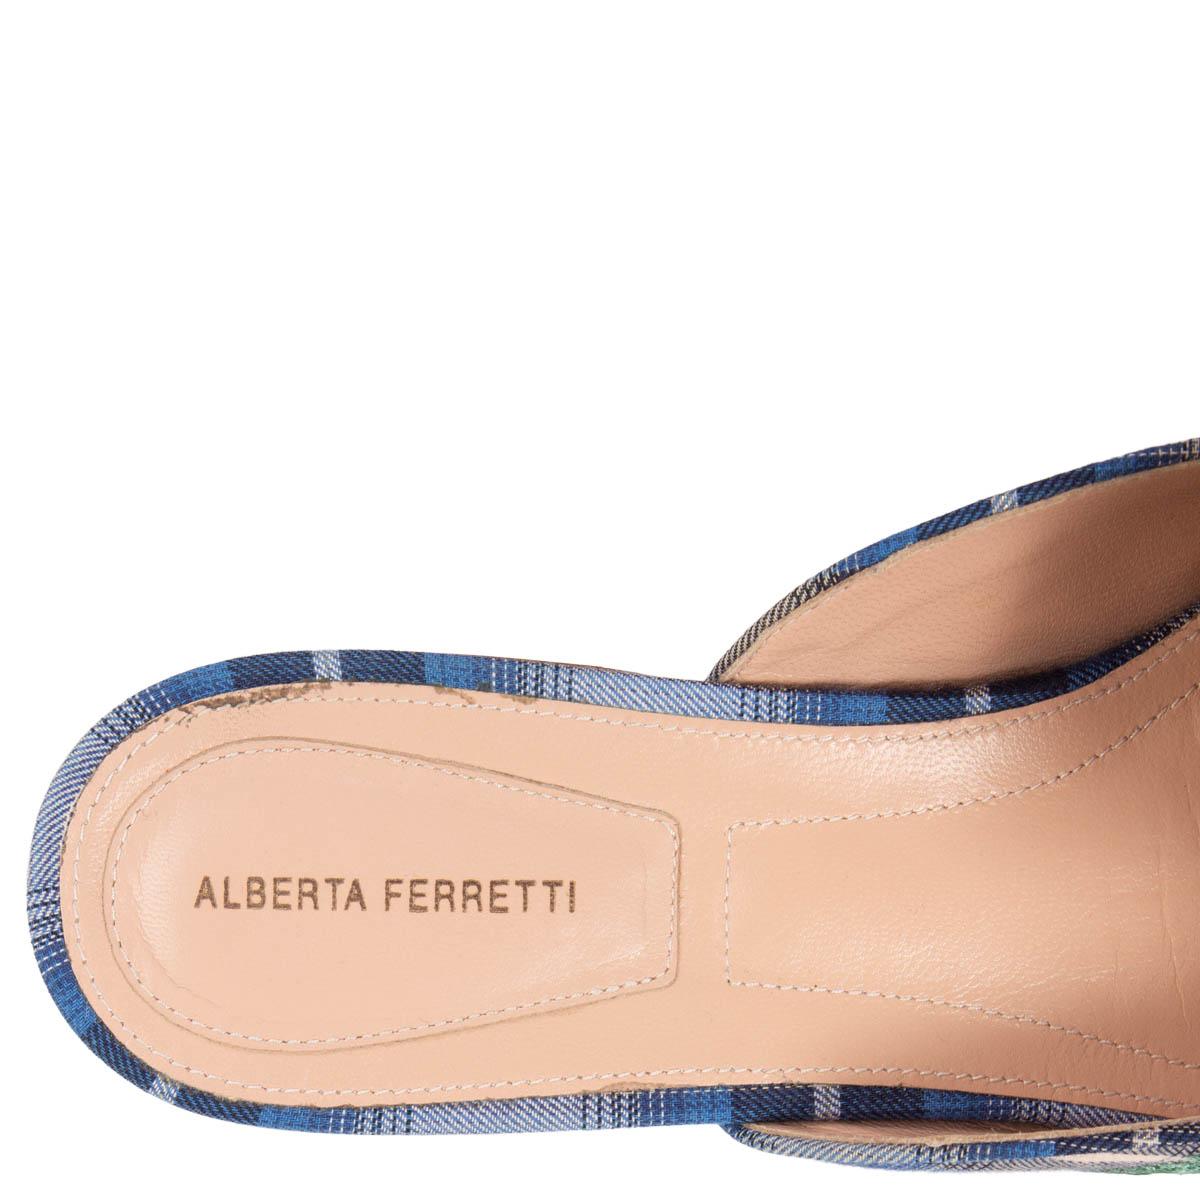 ALBERTA FERRETTI blue MIA FLORAL EMBROIDERED PLAID Mules Flats Shoes 38 2